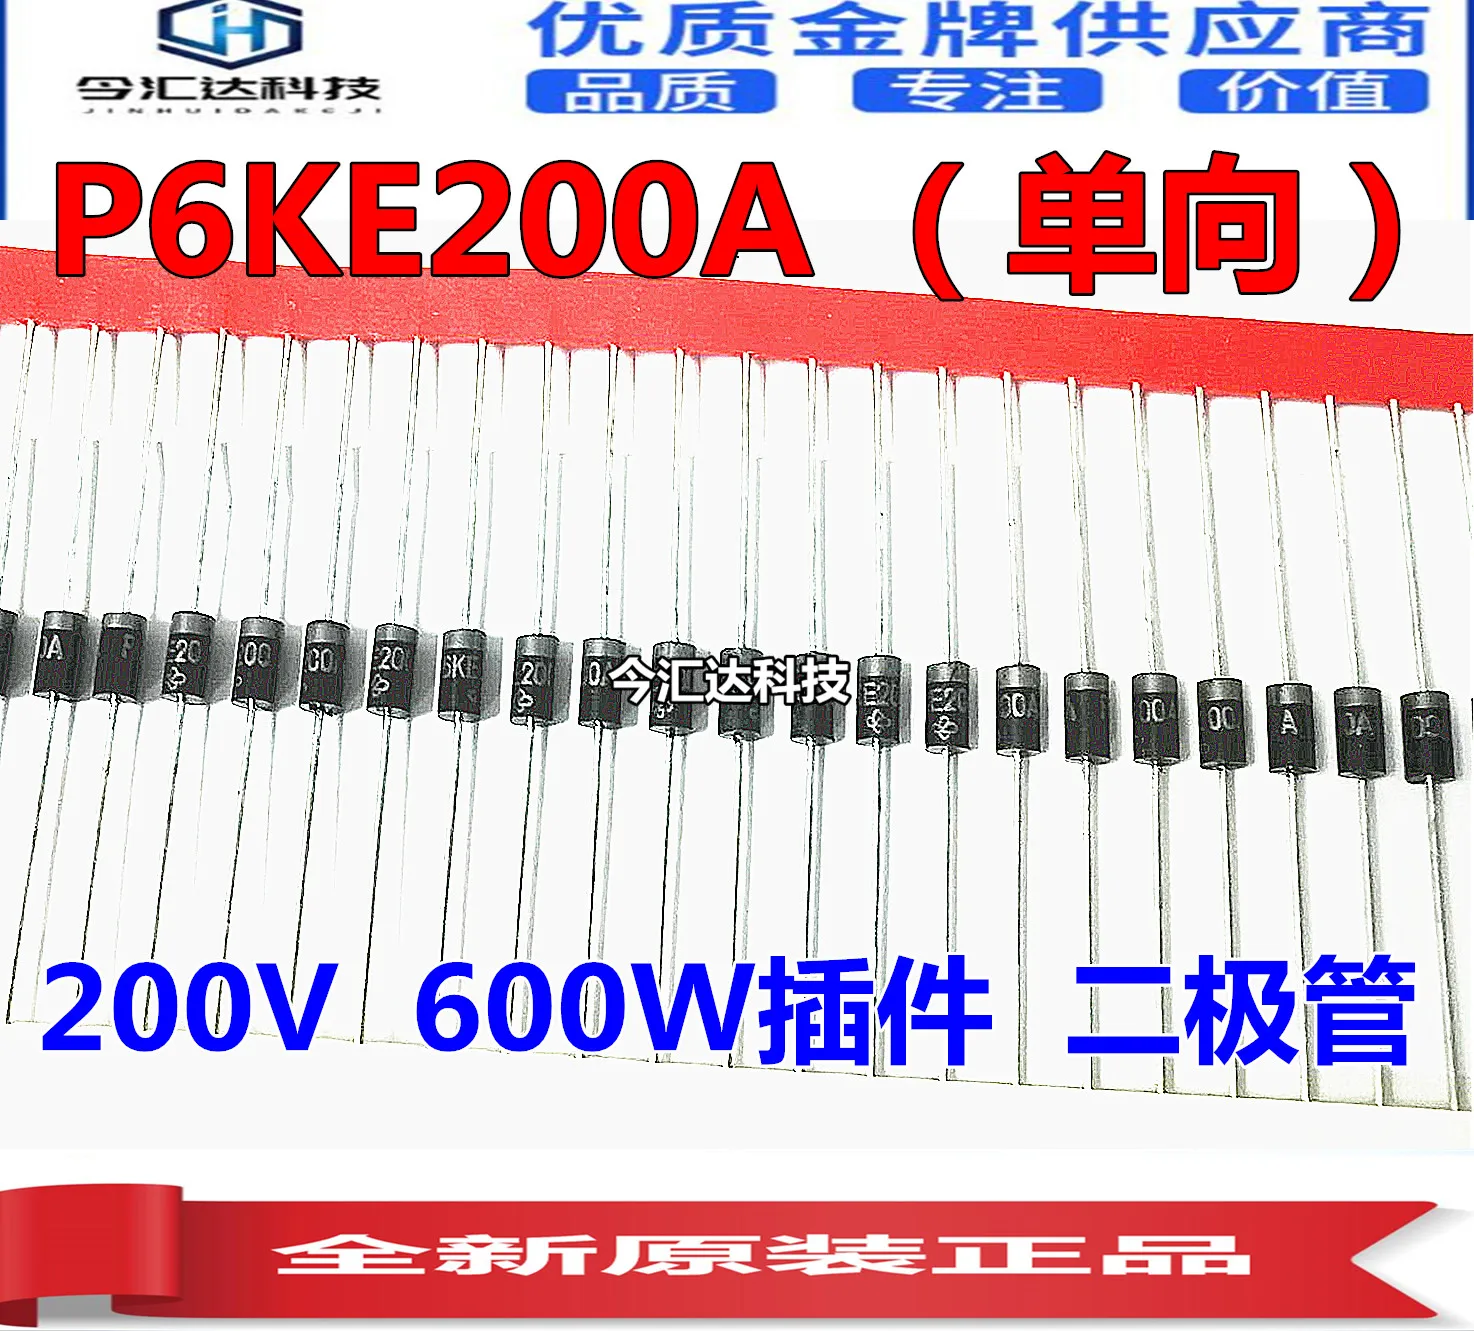 

30pcs original new 30pcs original new P6KE200ADO-15 (unidirectional) TVS transient suppression diode